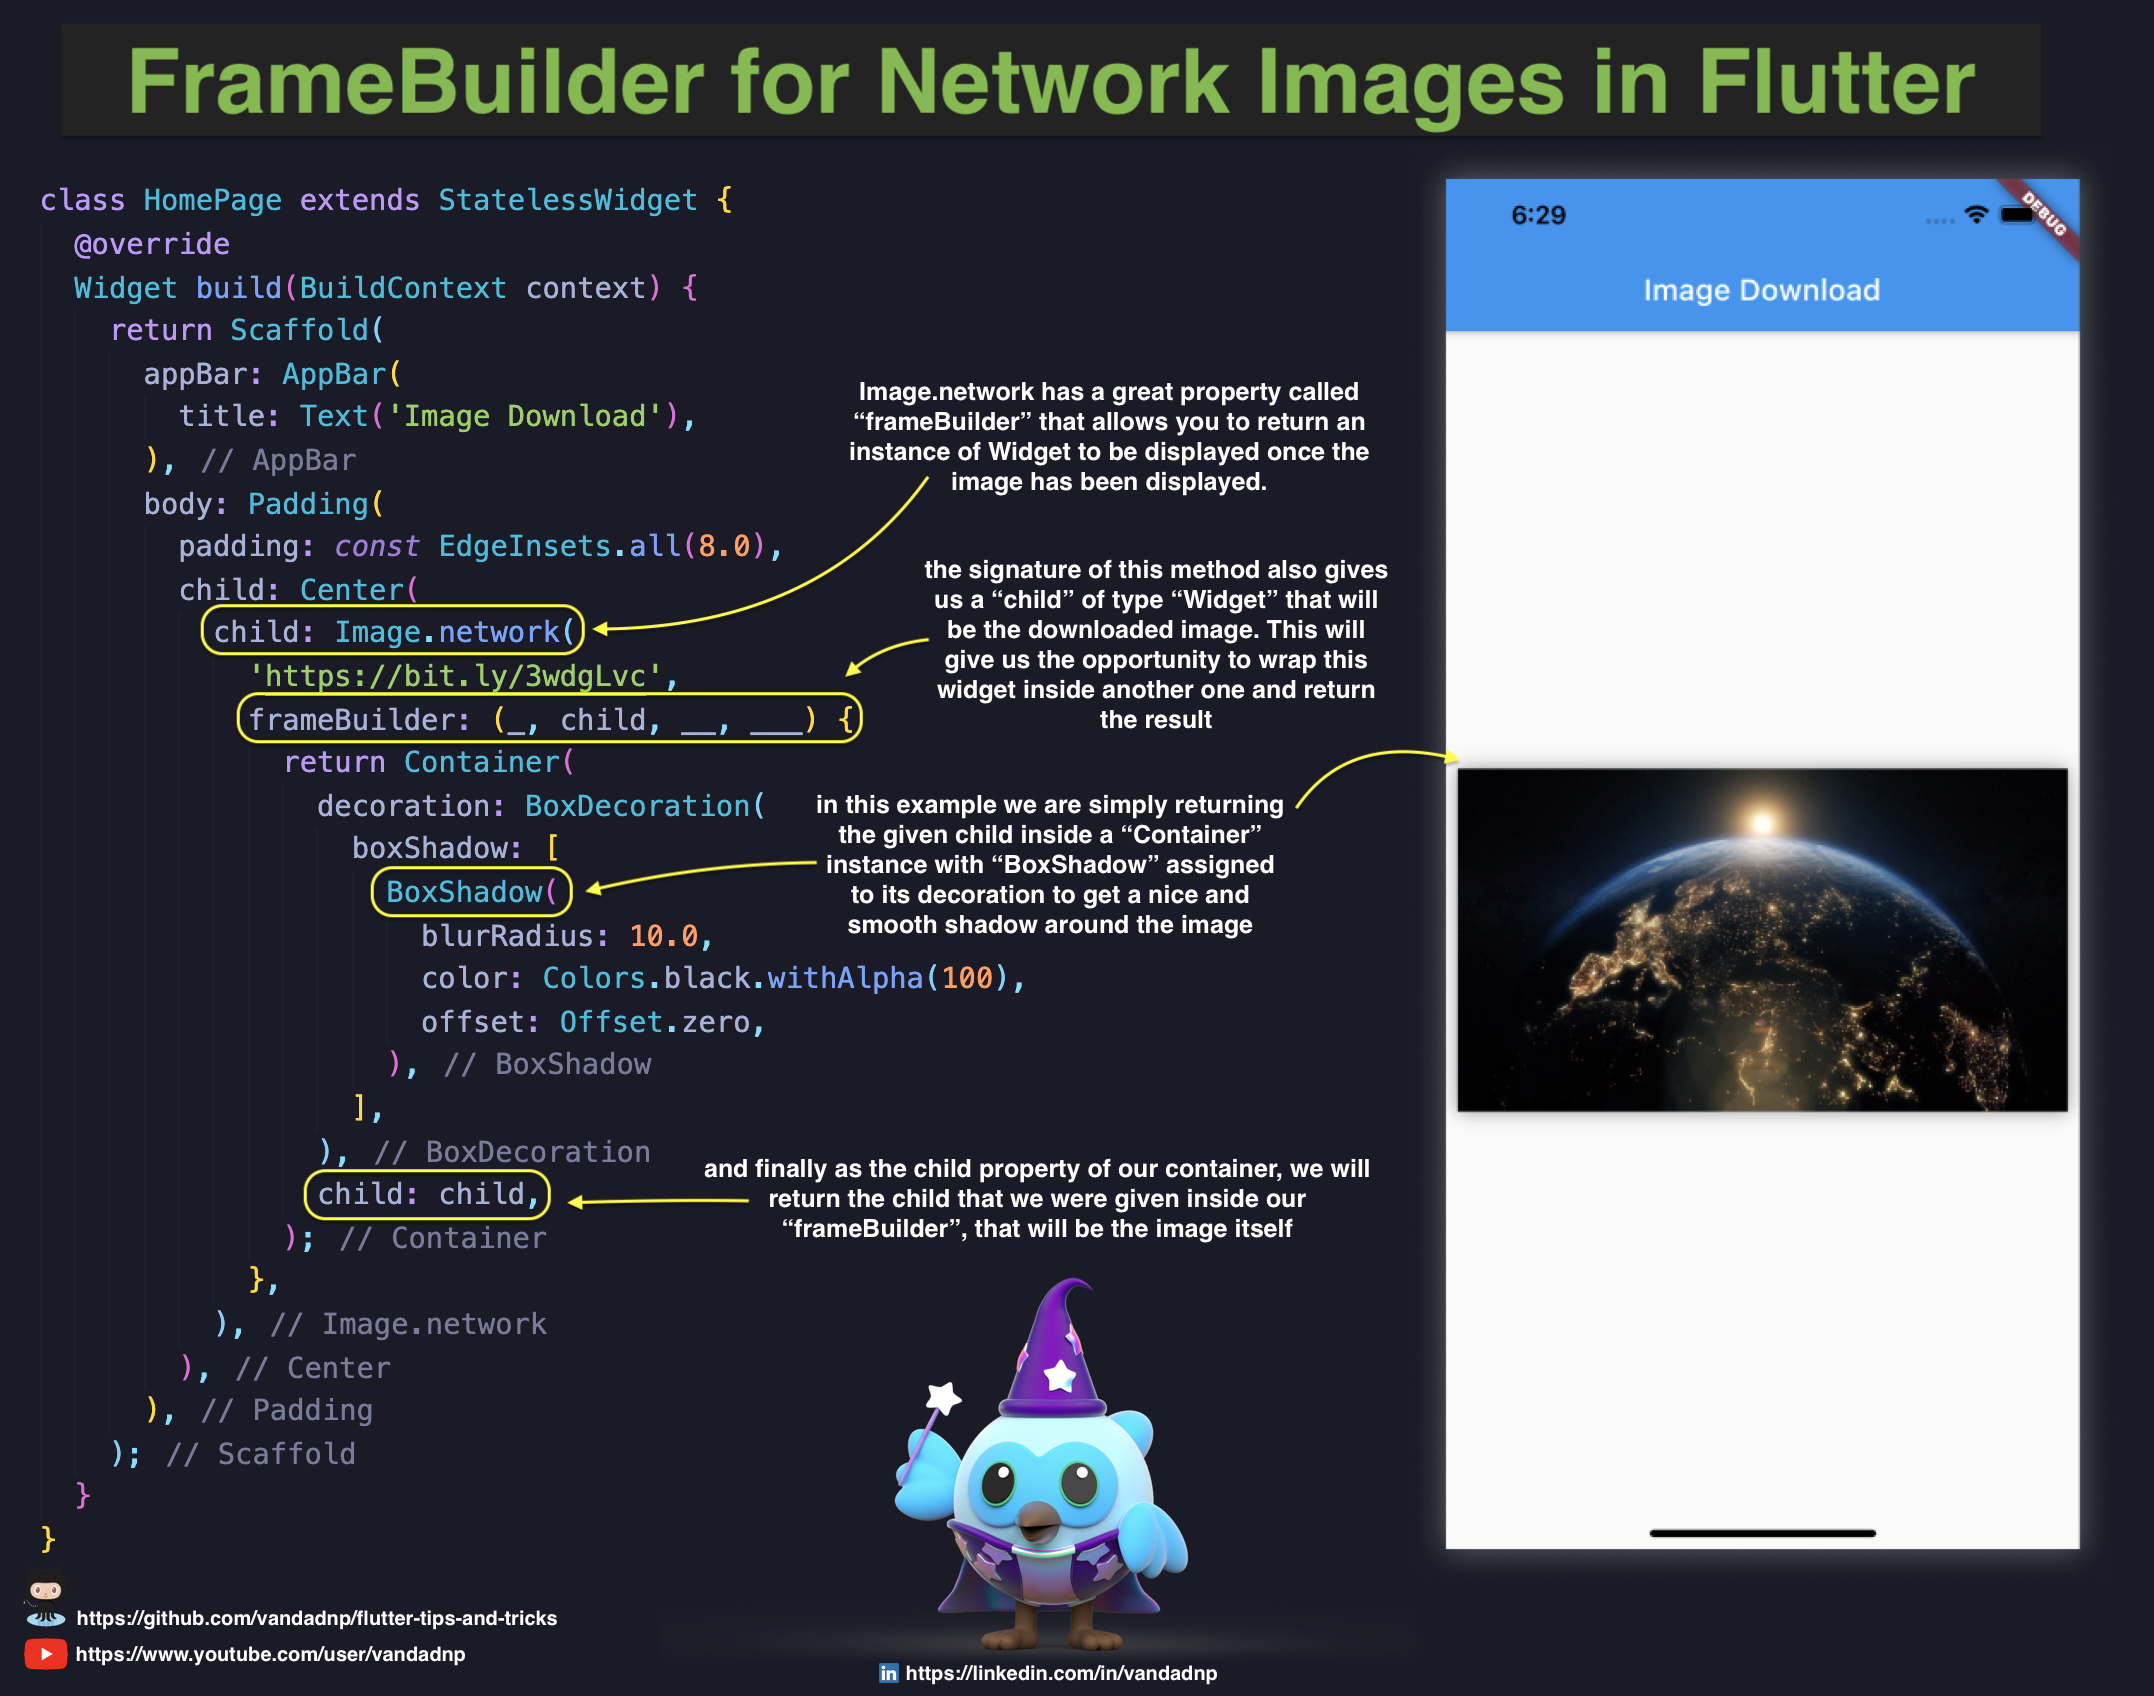 framebuilder-for-network-images-in-flutter.jpg